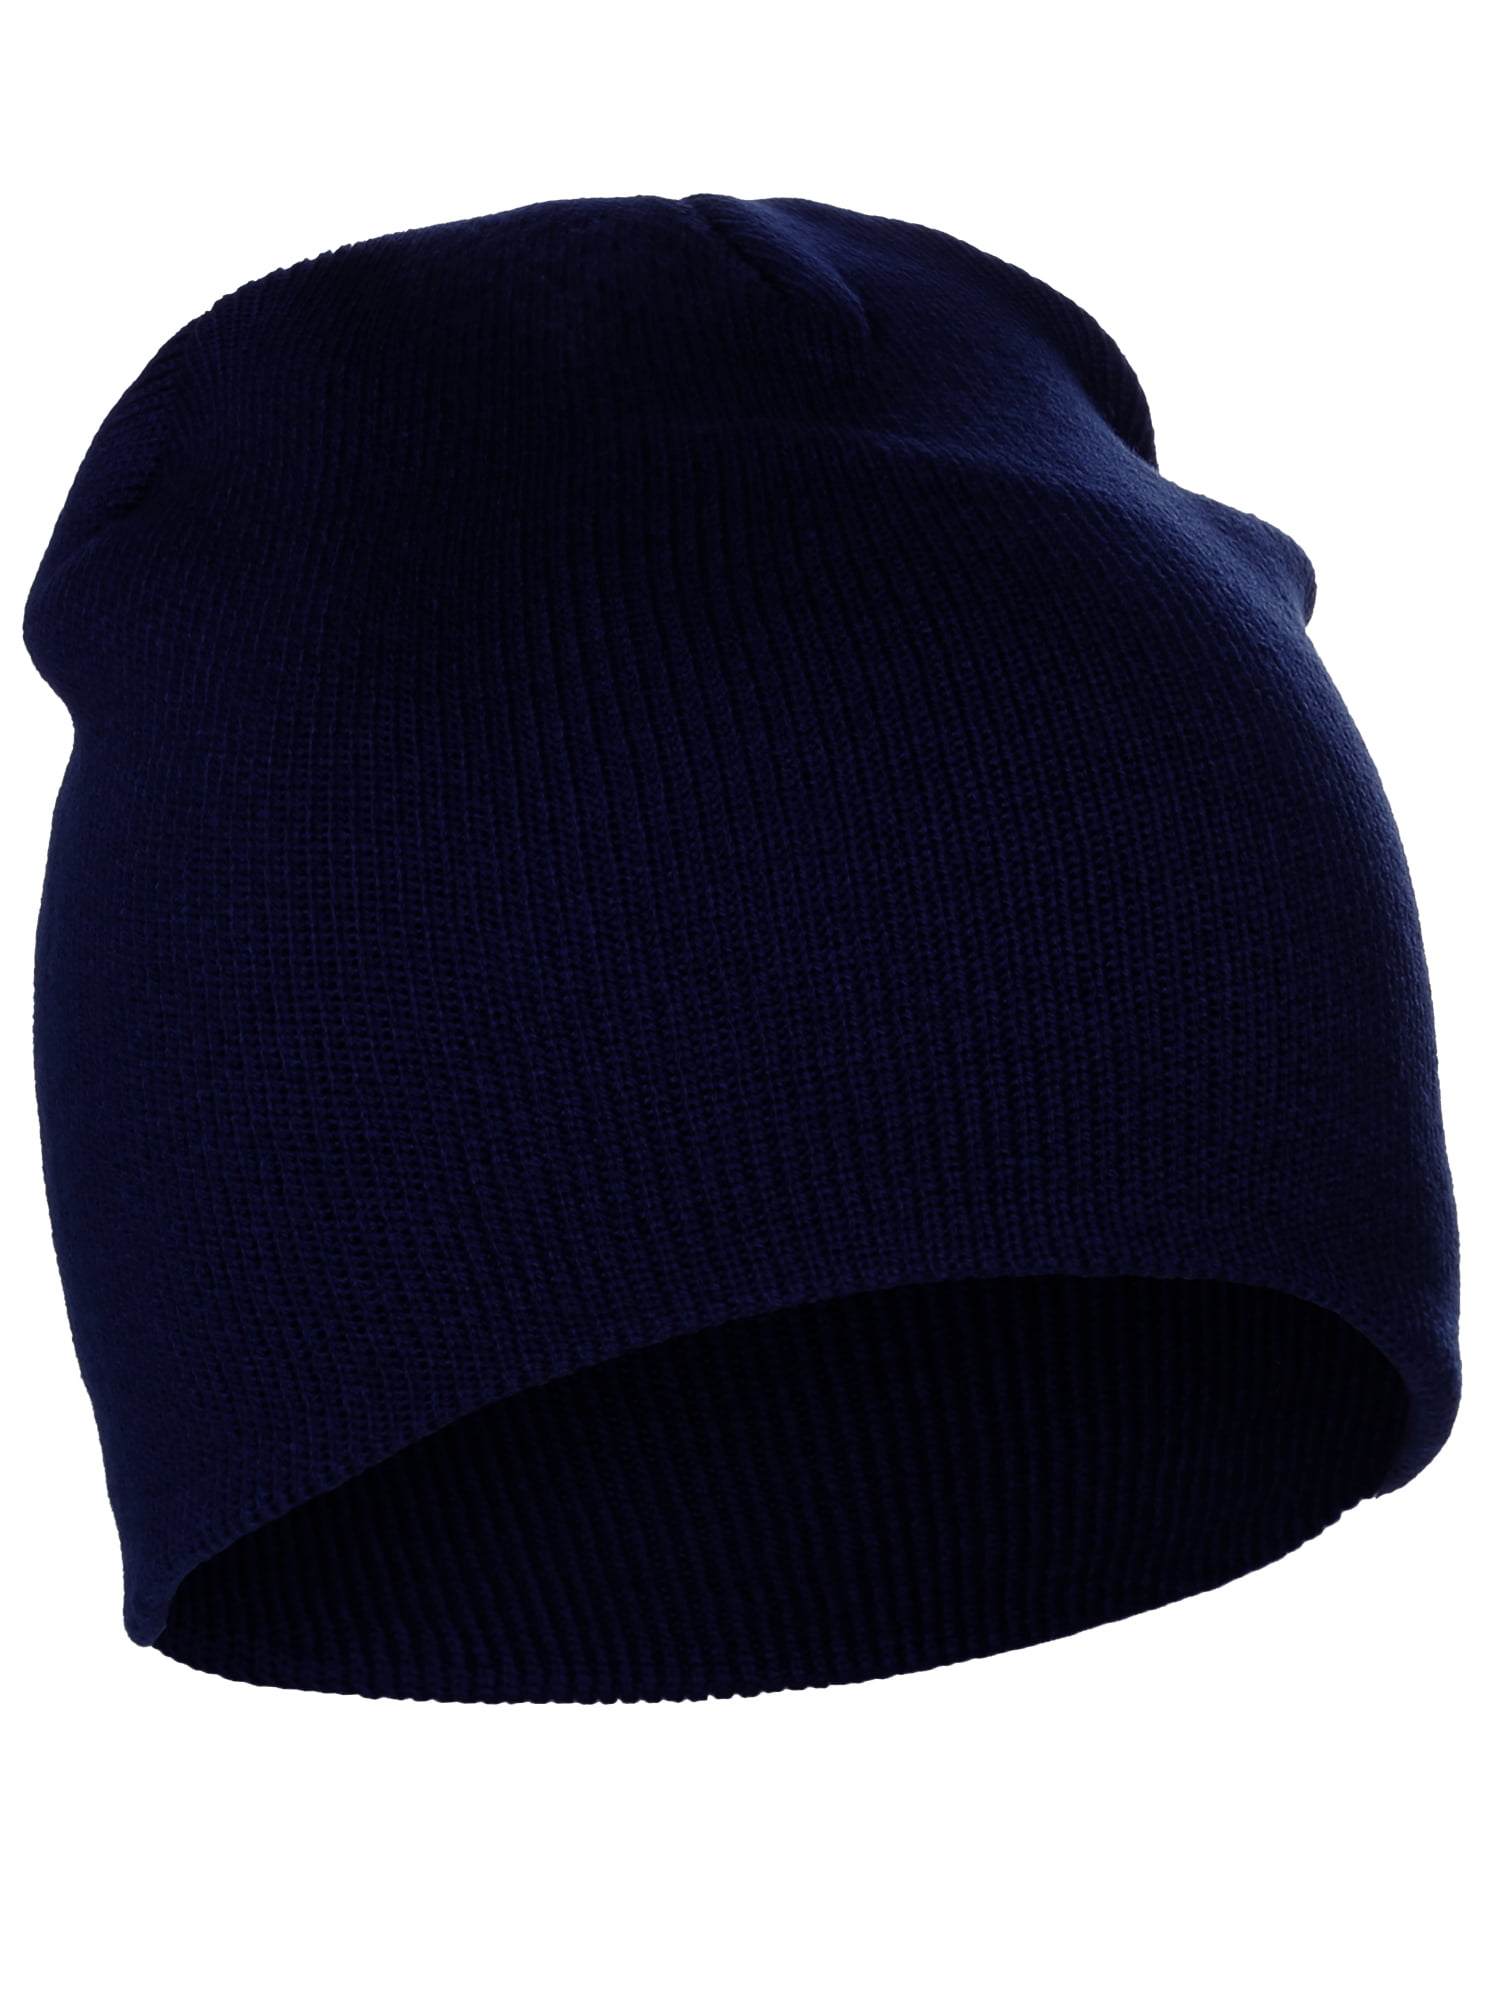 Classic Plain Cuffless Beanie Winter Knit Hat Skully Cap, Navy ...